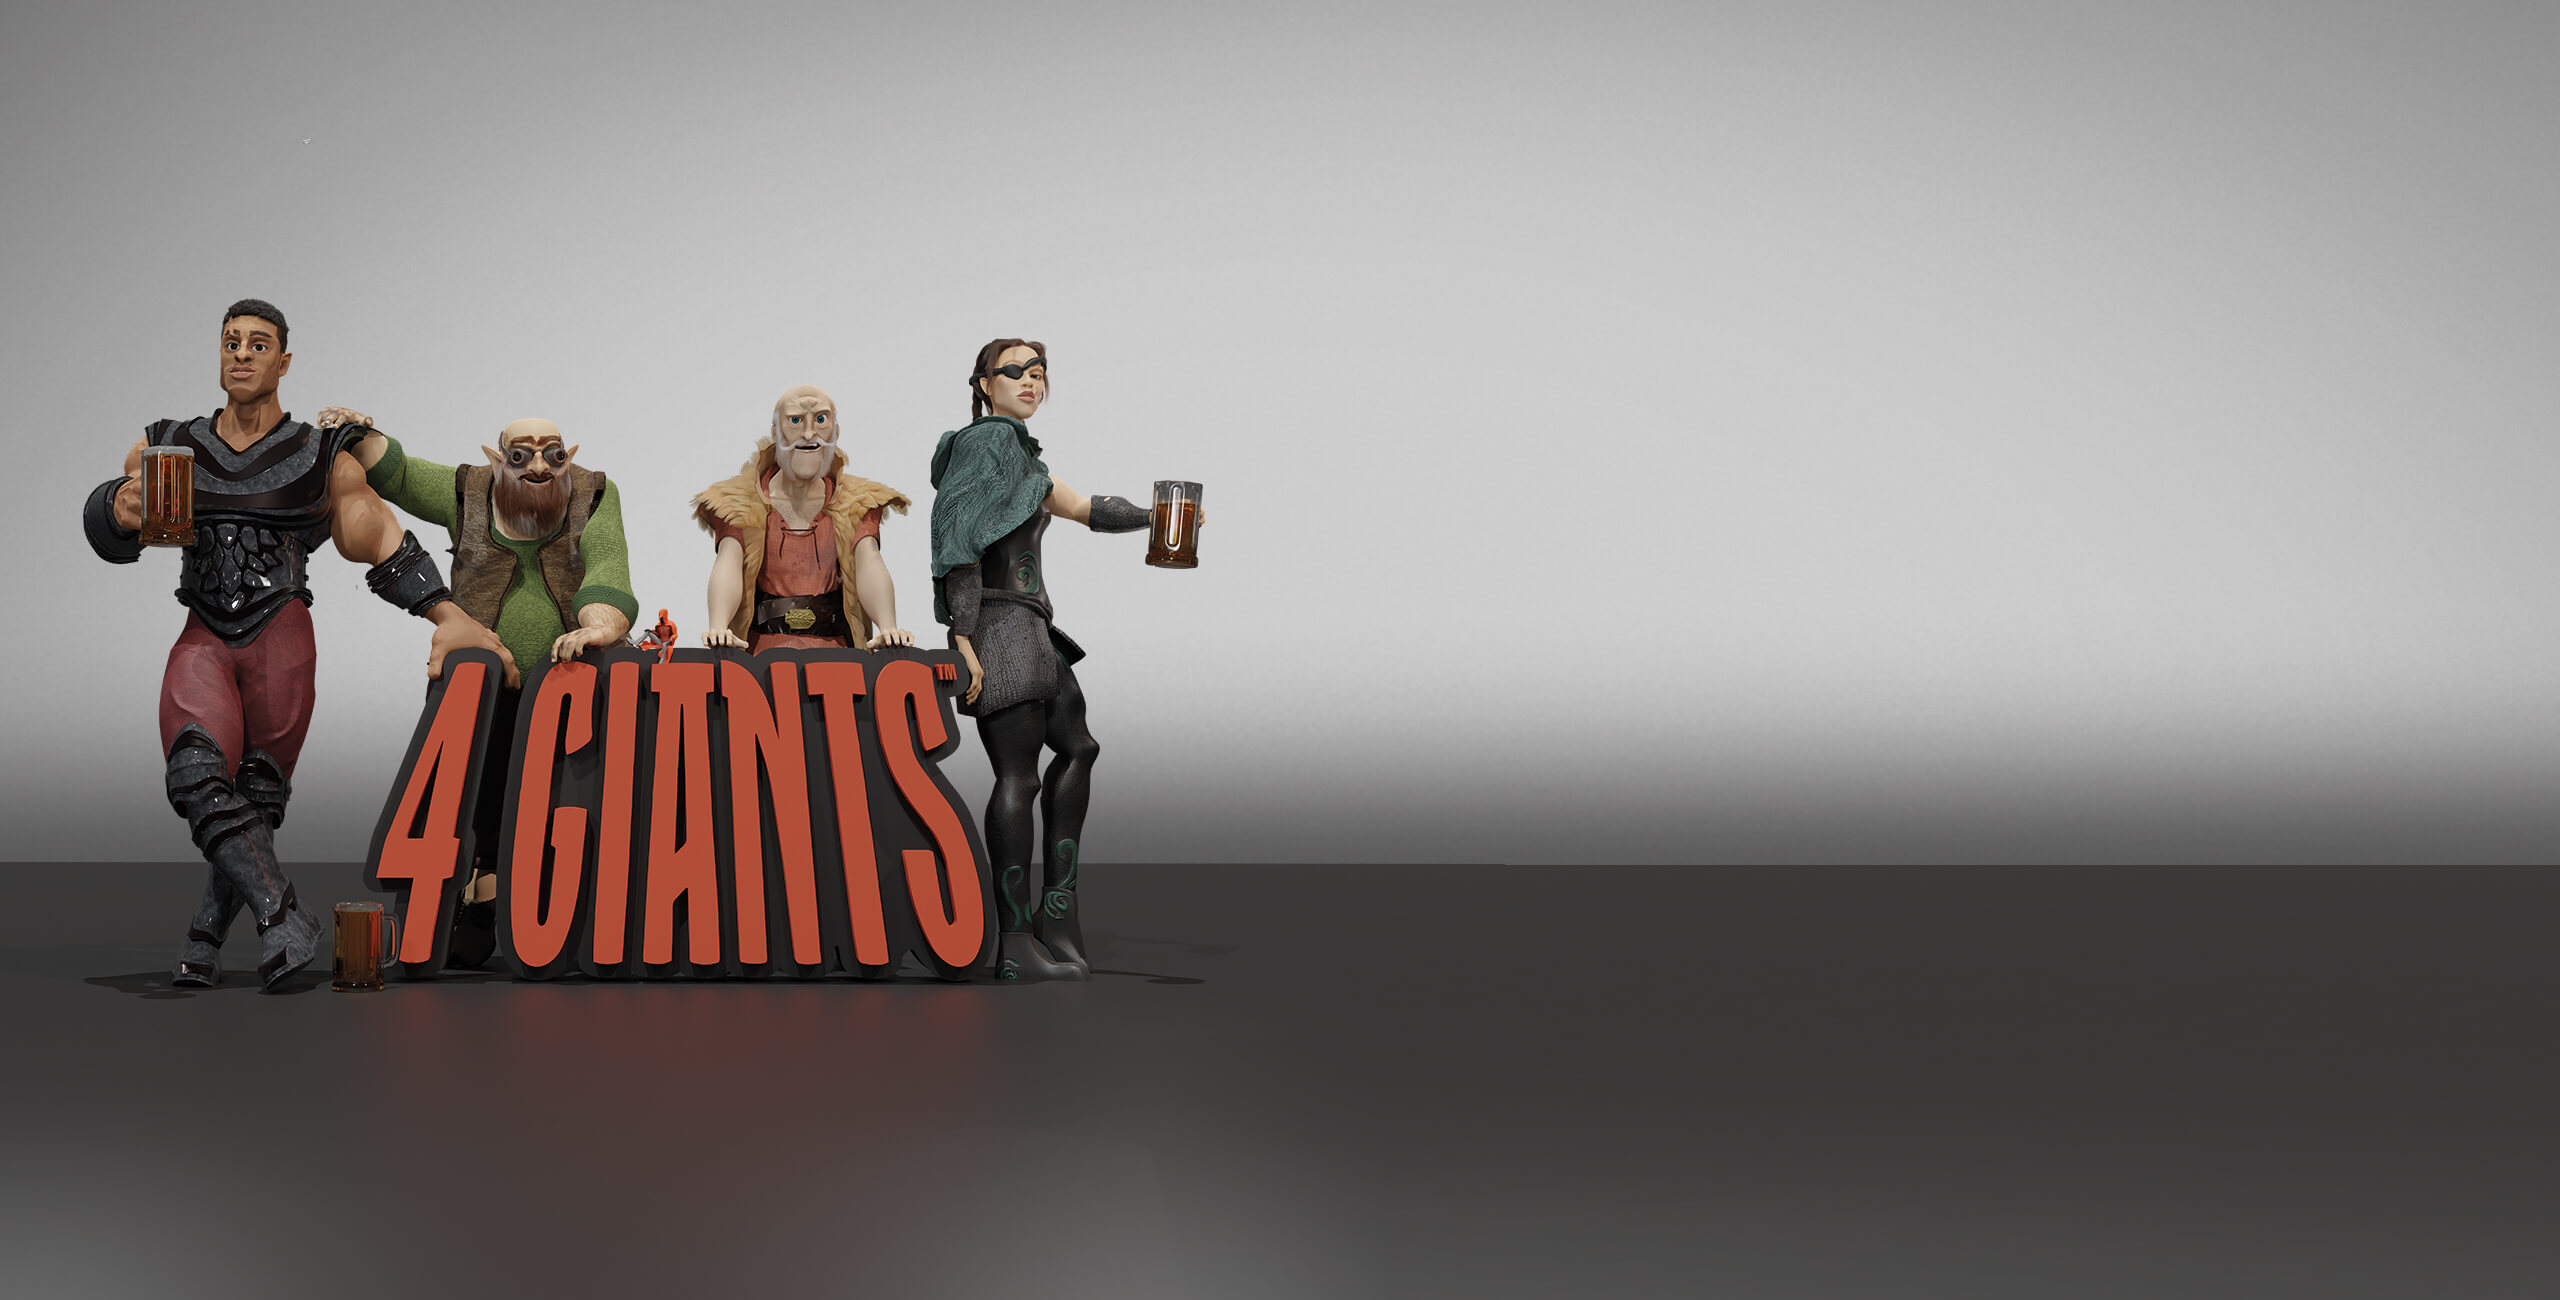 4 Giants character illustrations